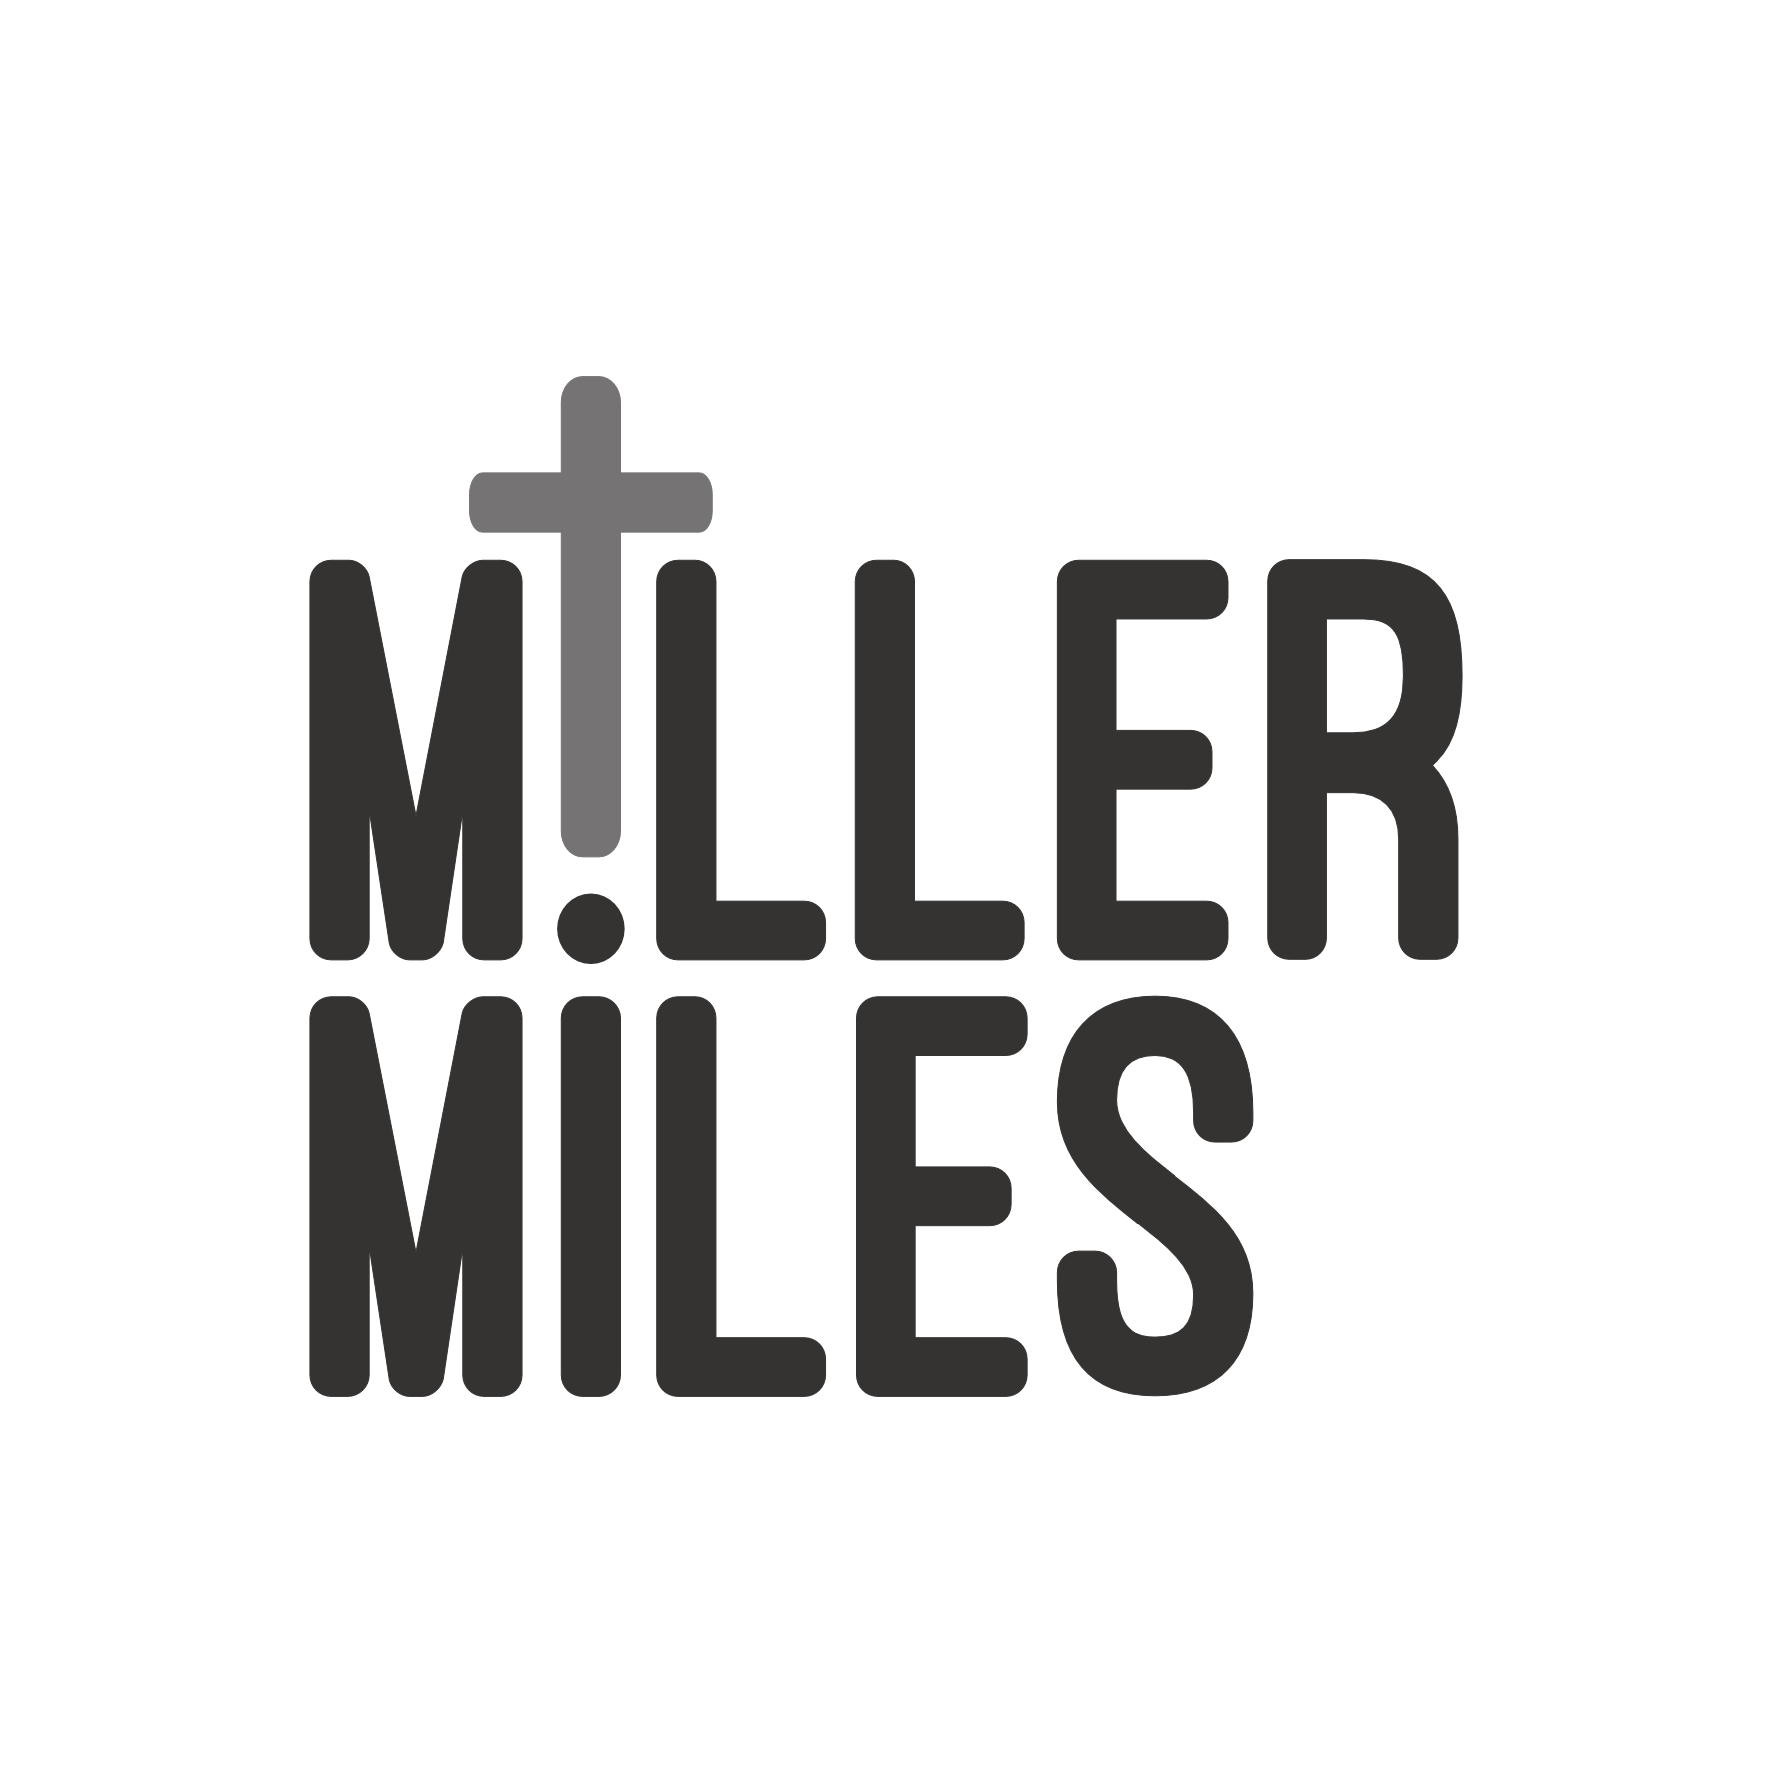 Miller Miles